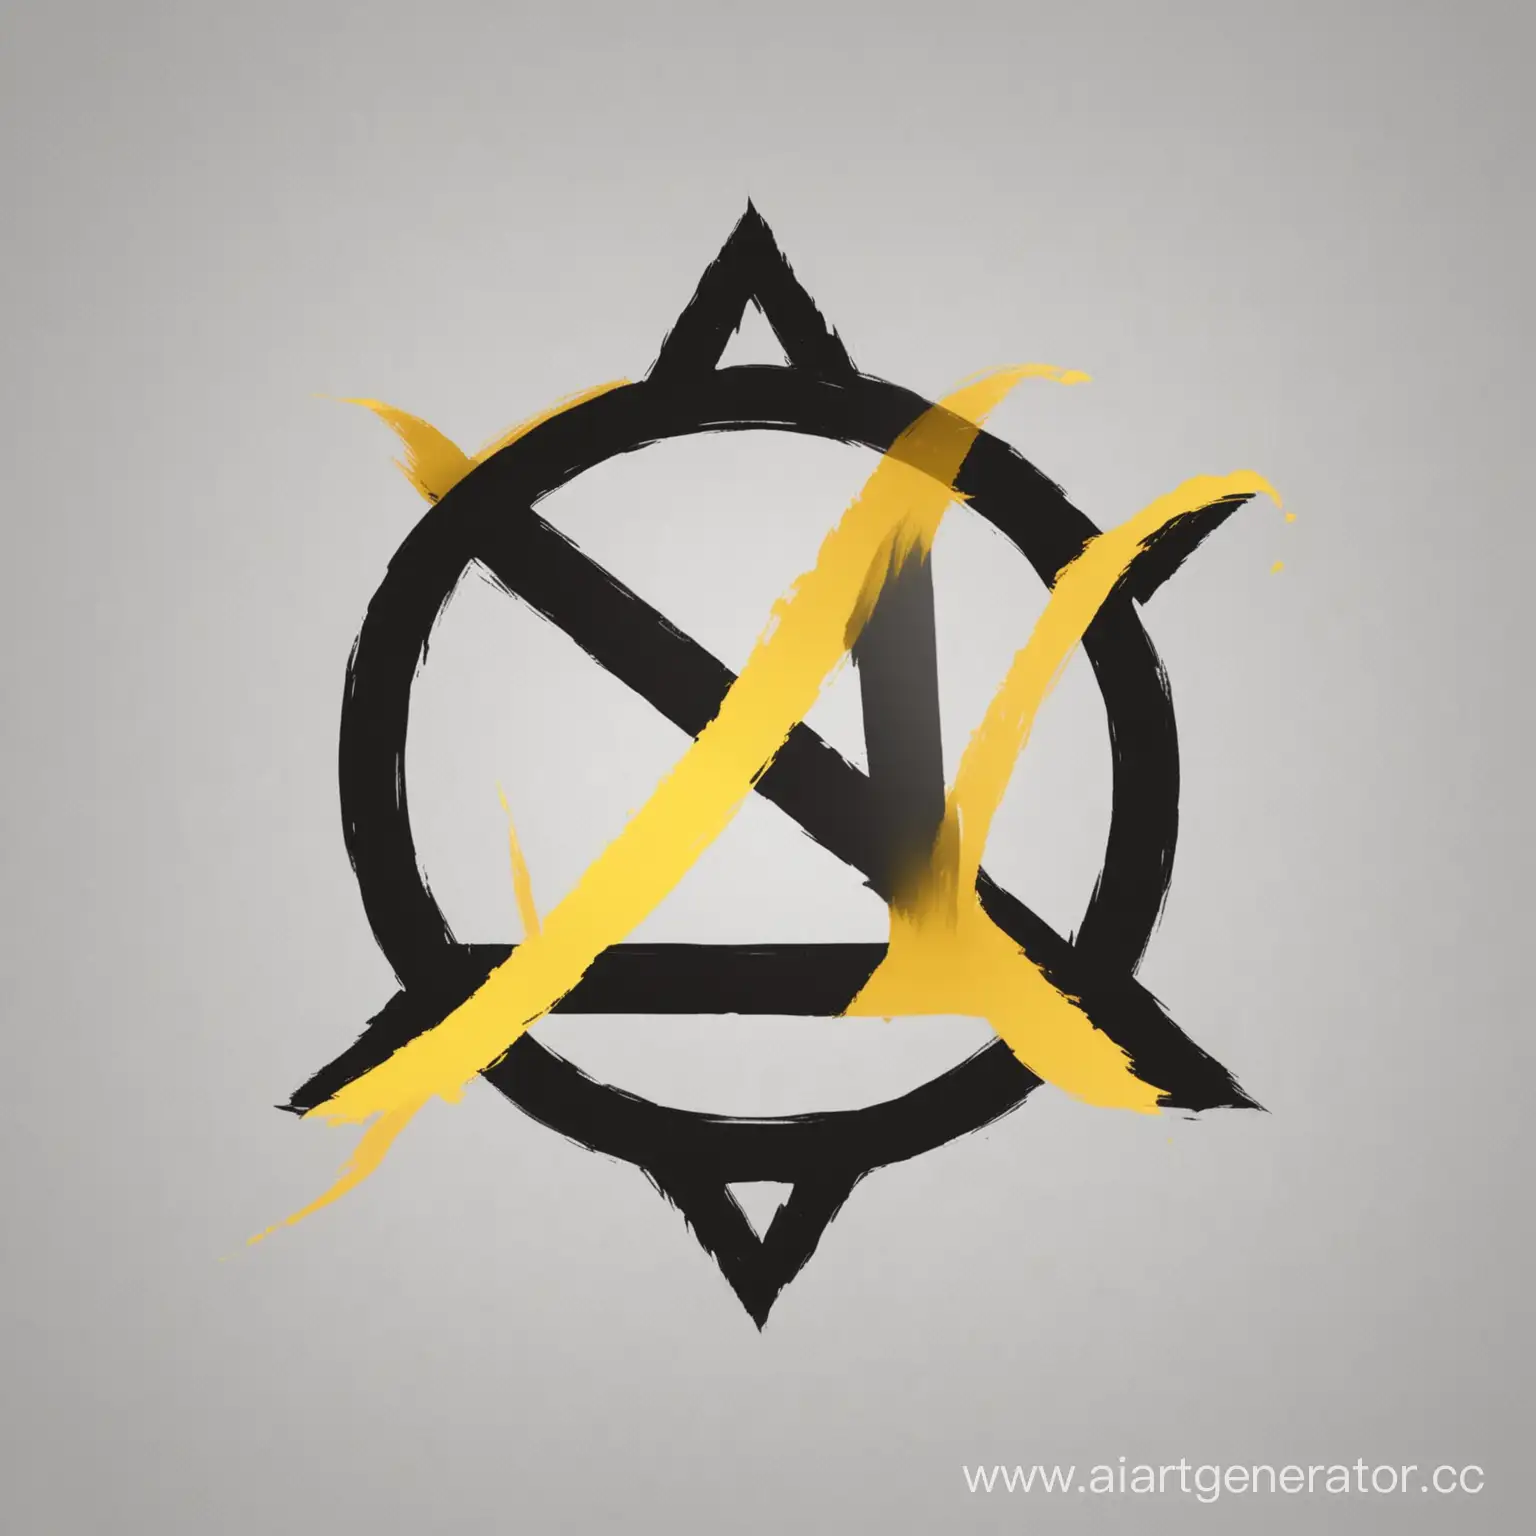 Dynamic-Political-Emblem-with-Gradient-YellowOrange-Hues